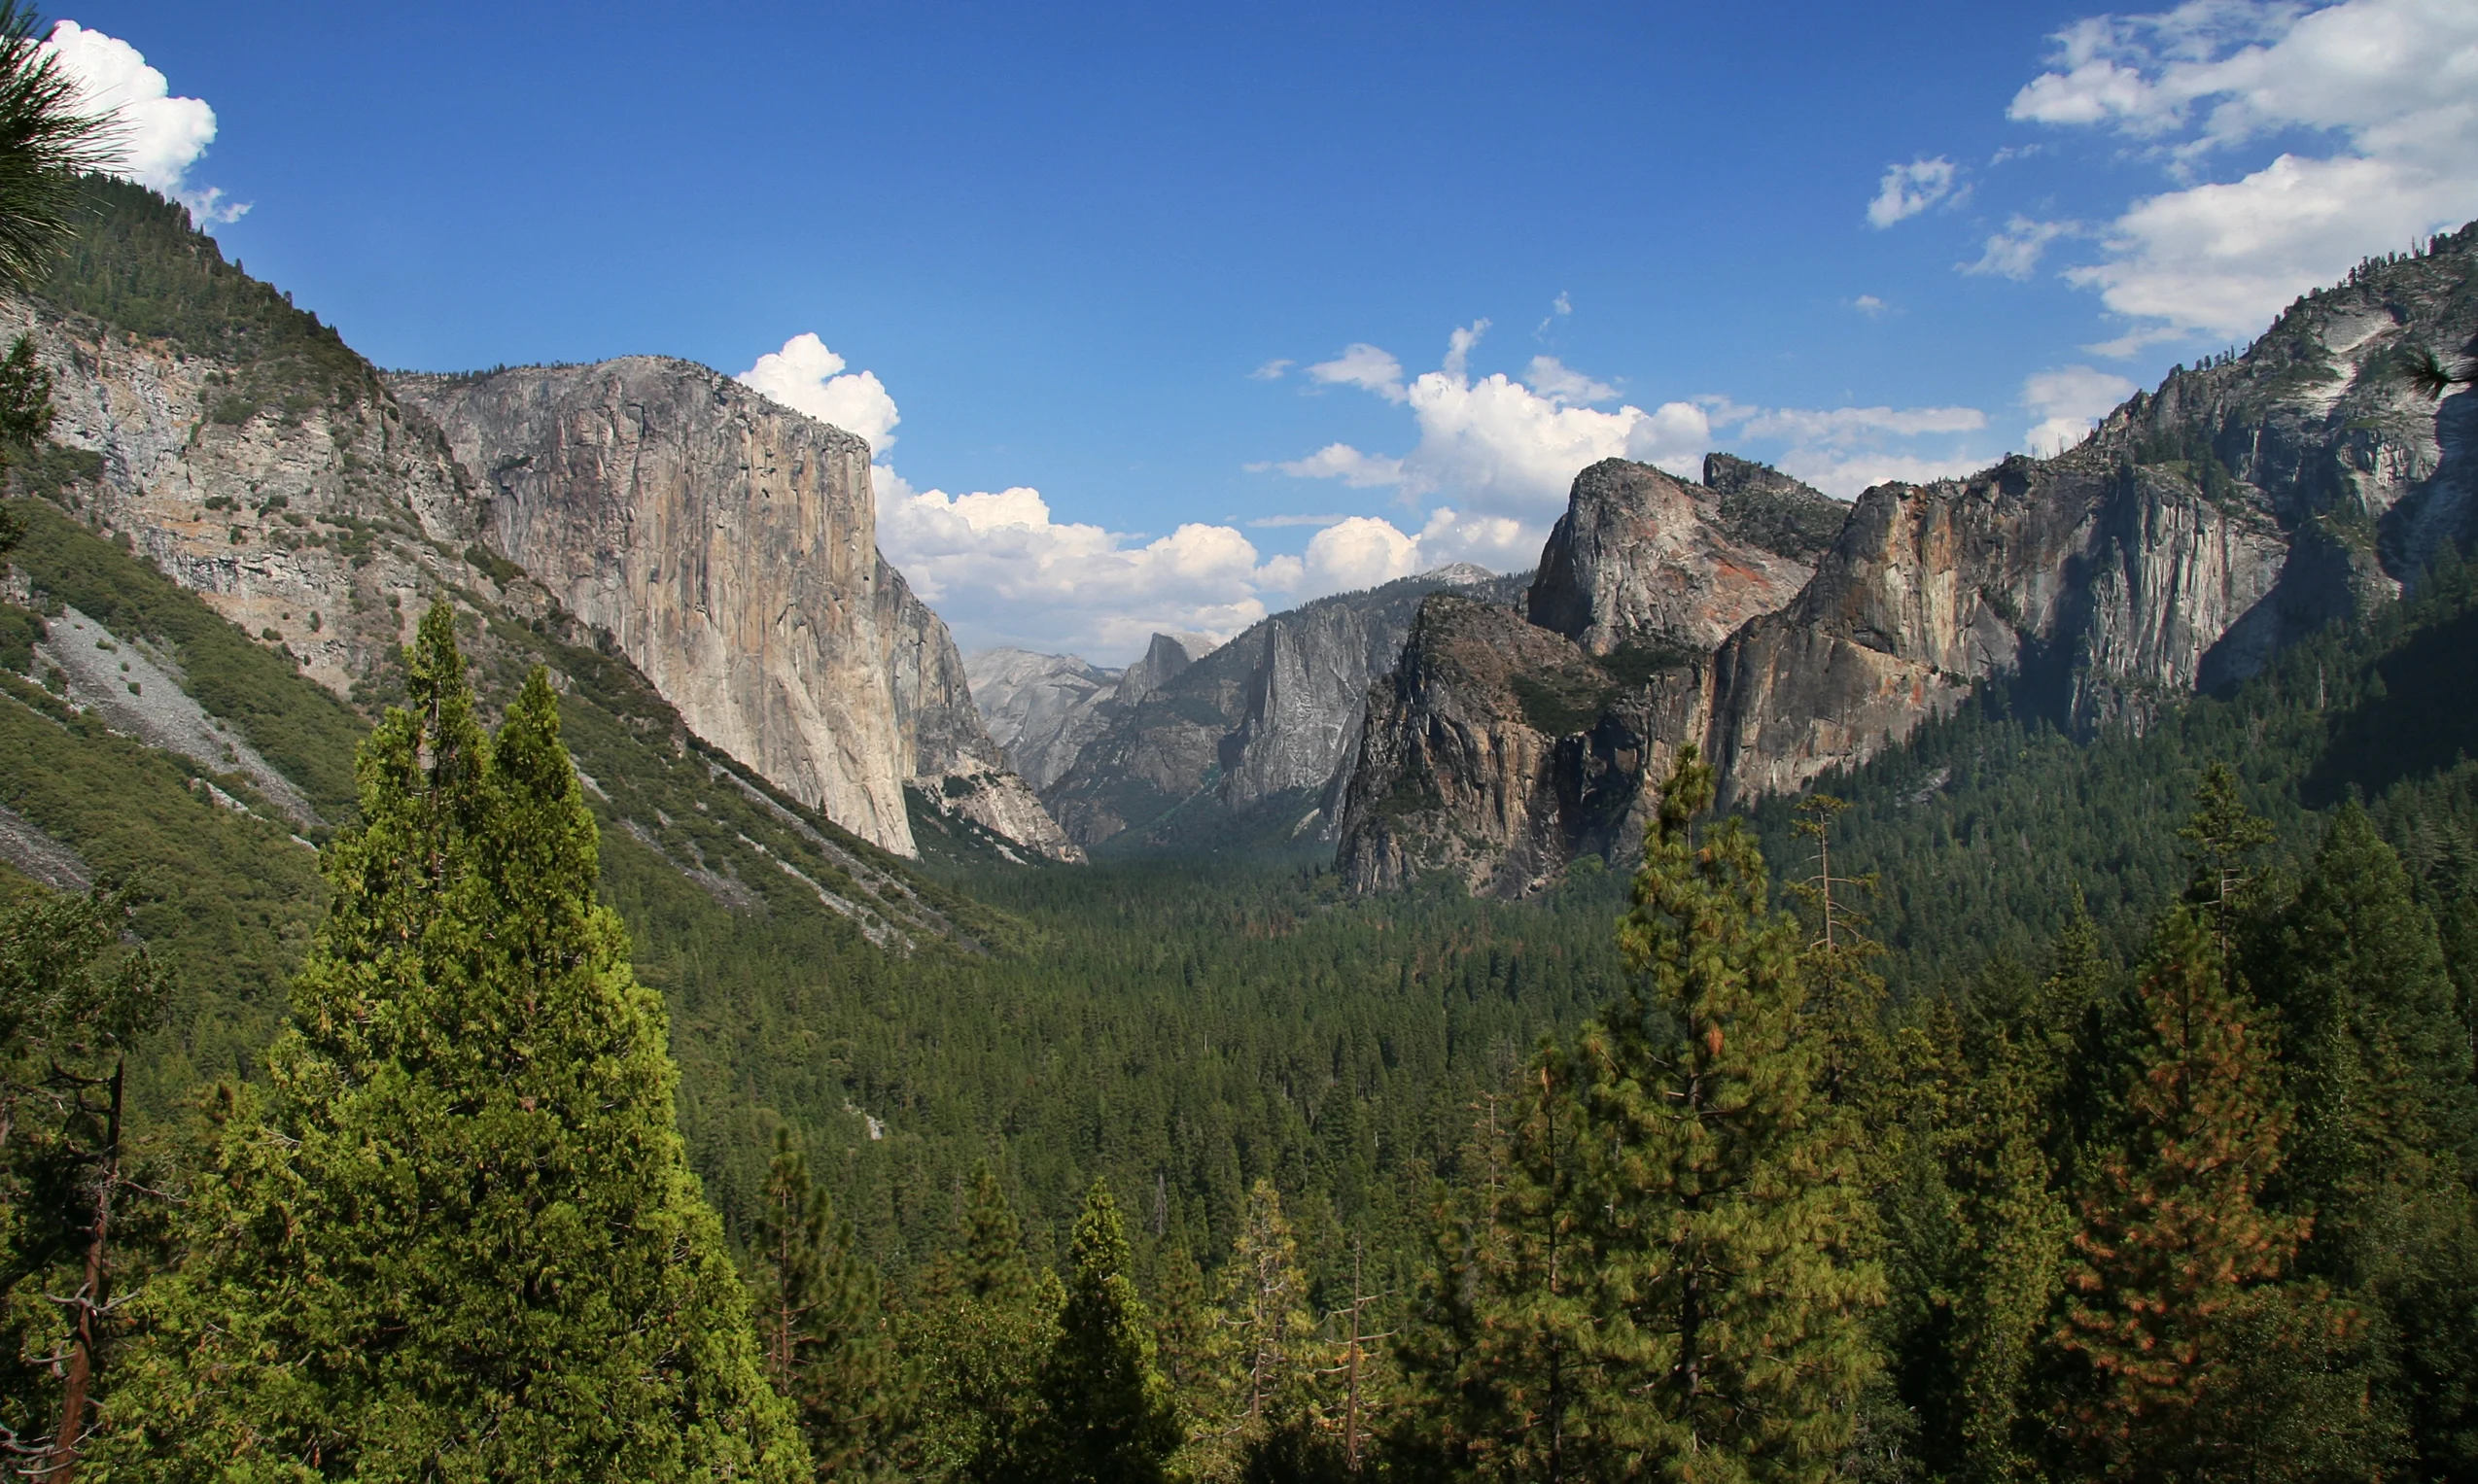 YosemitePark2_amk